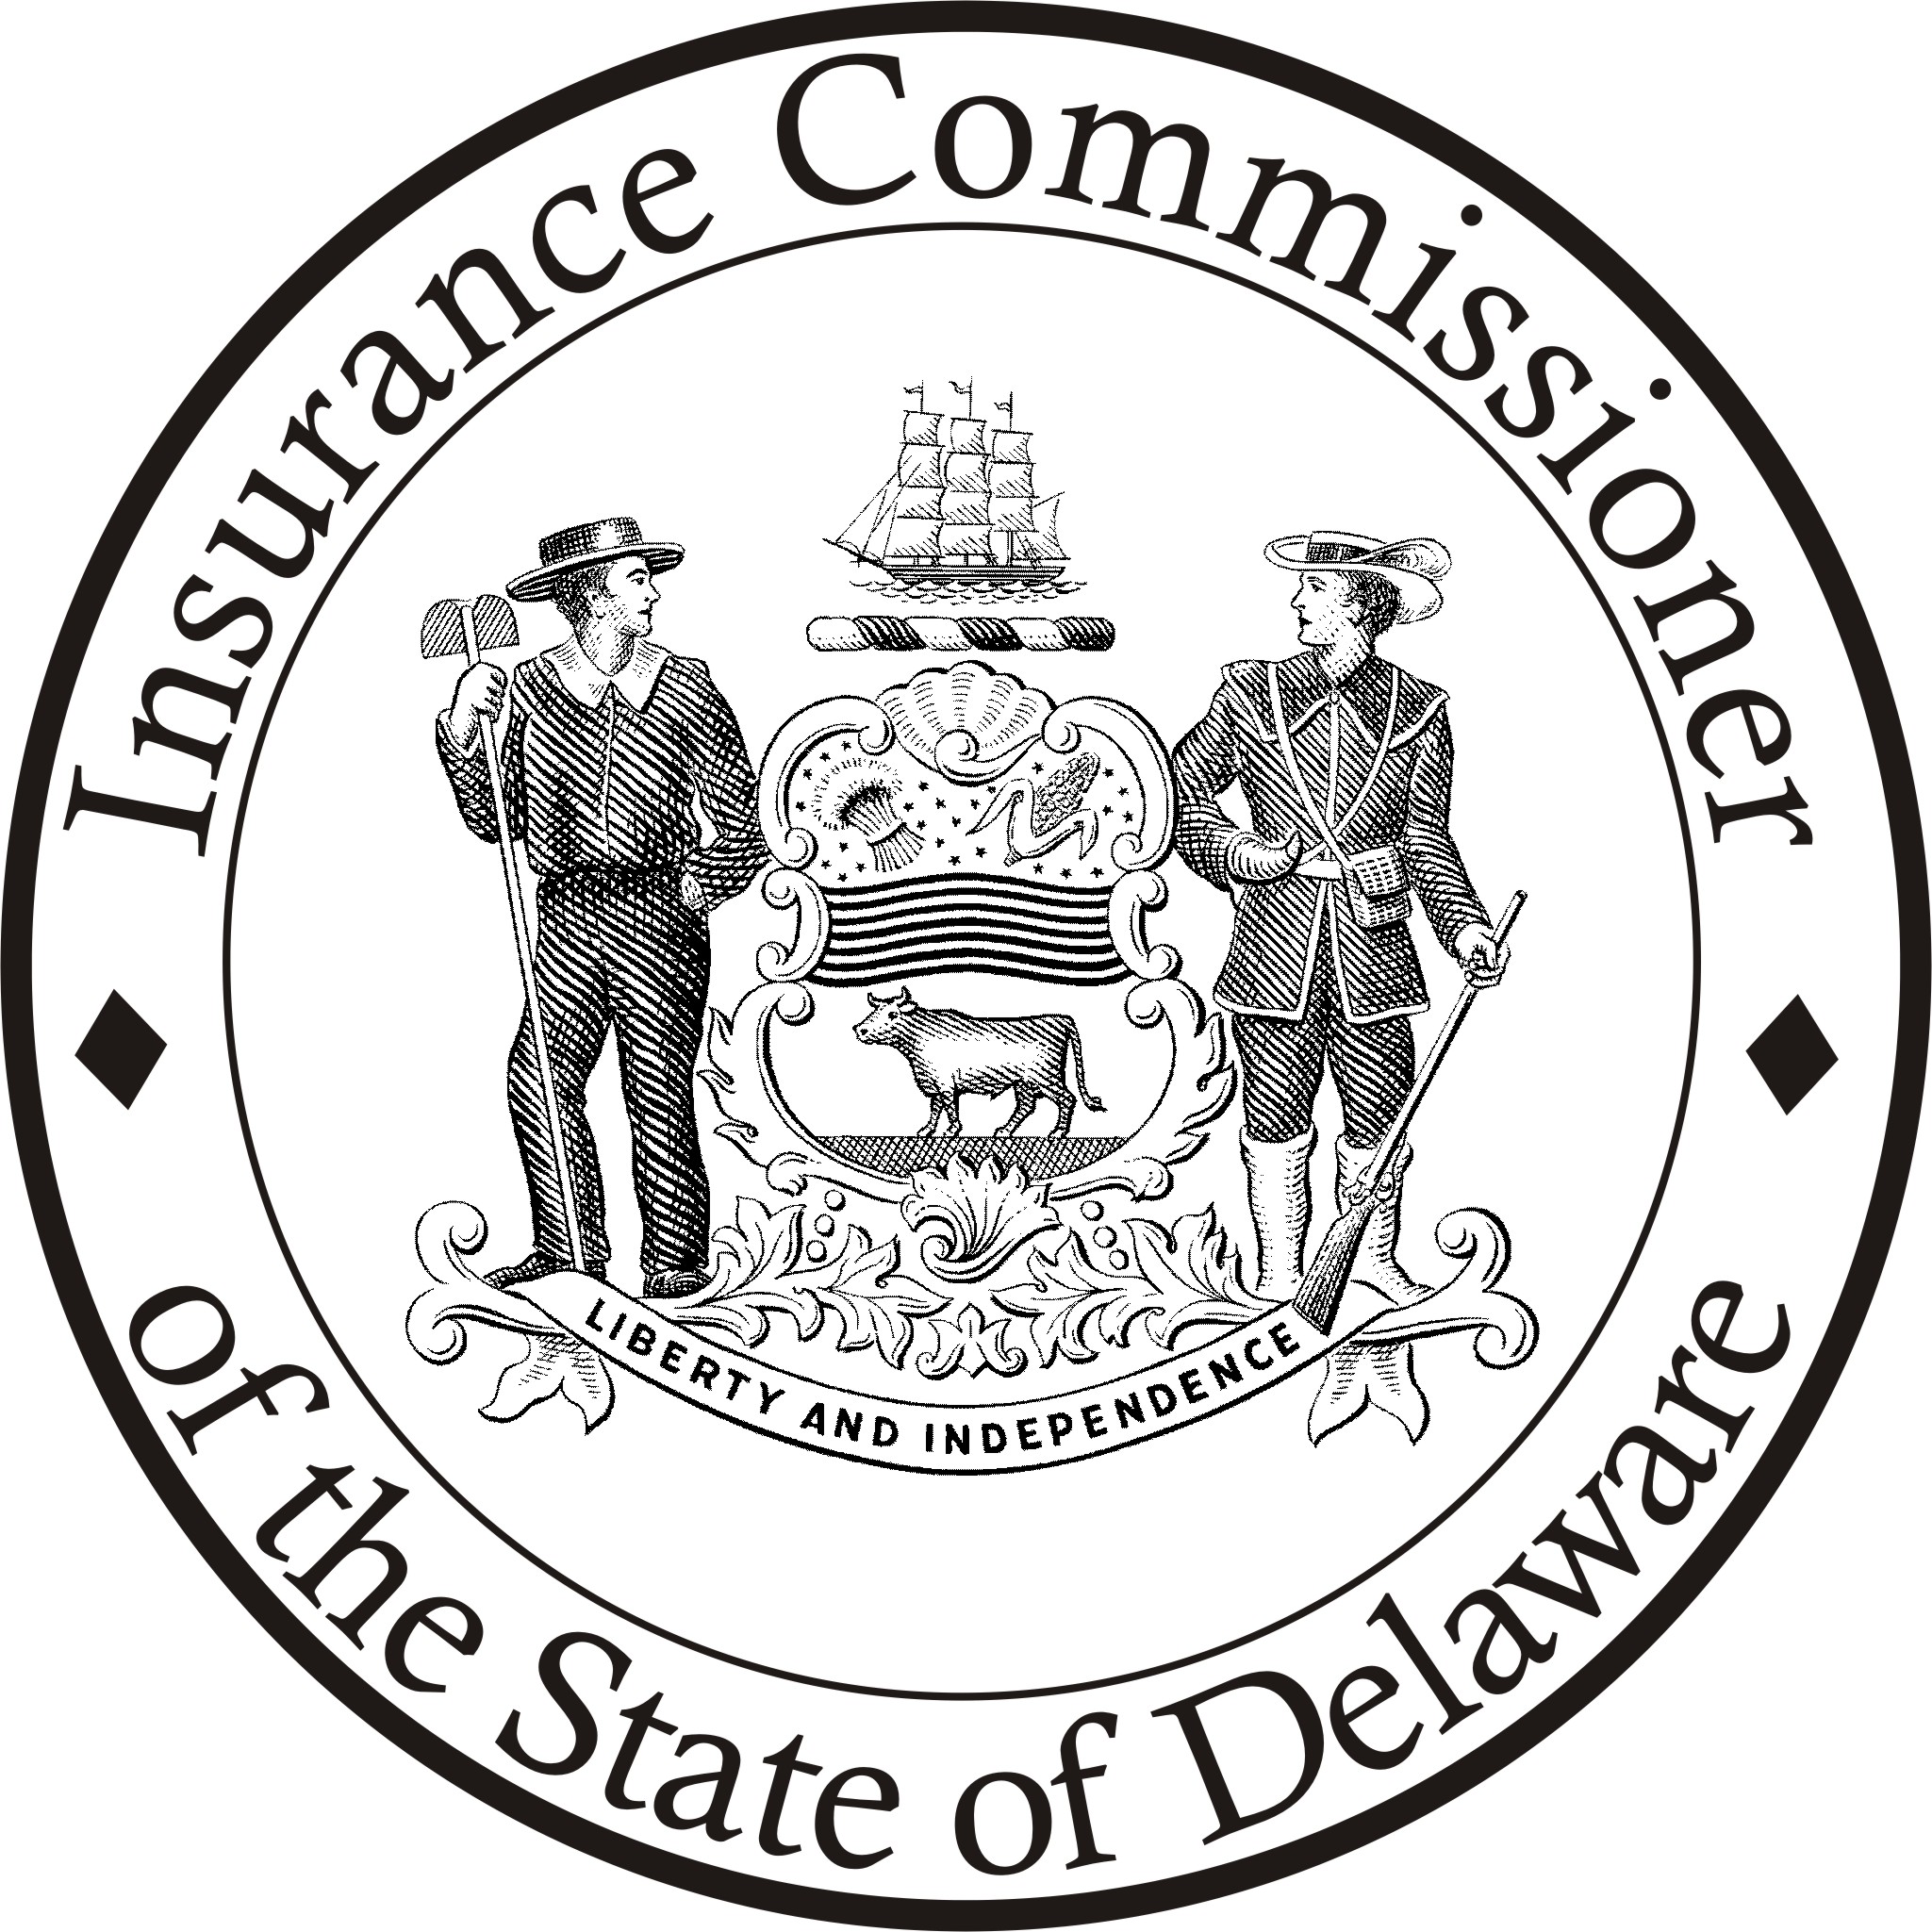 Former policyholders with Delaware insurer entitled to unclaimed